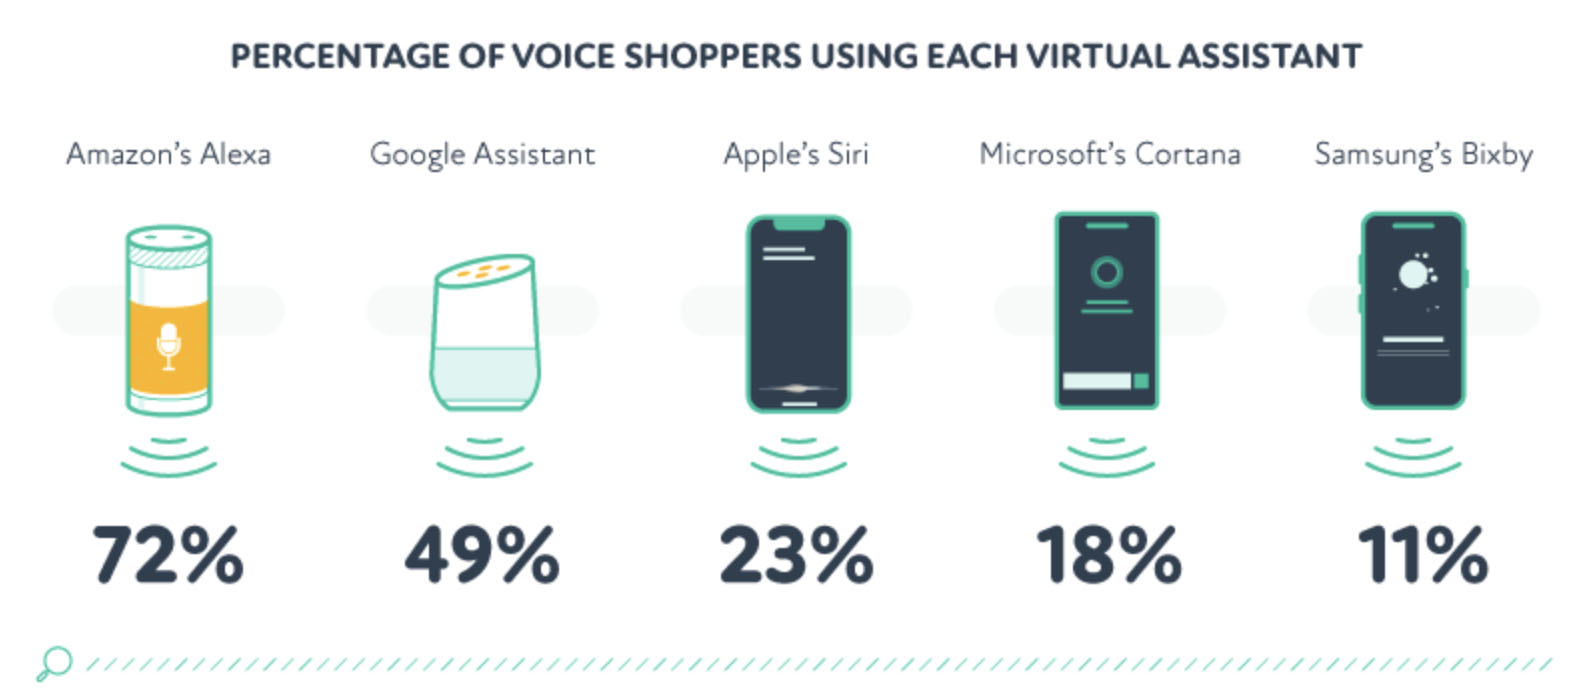 Voice shopping assistant distribution amazon alexa 72% google assistant 49% apple siri 23%.